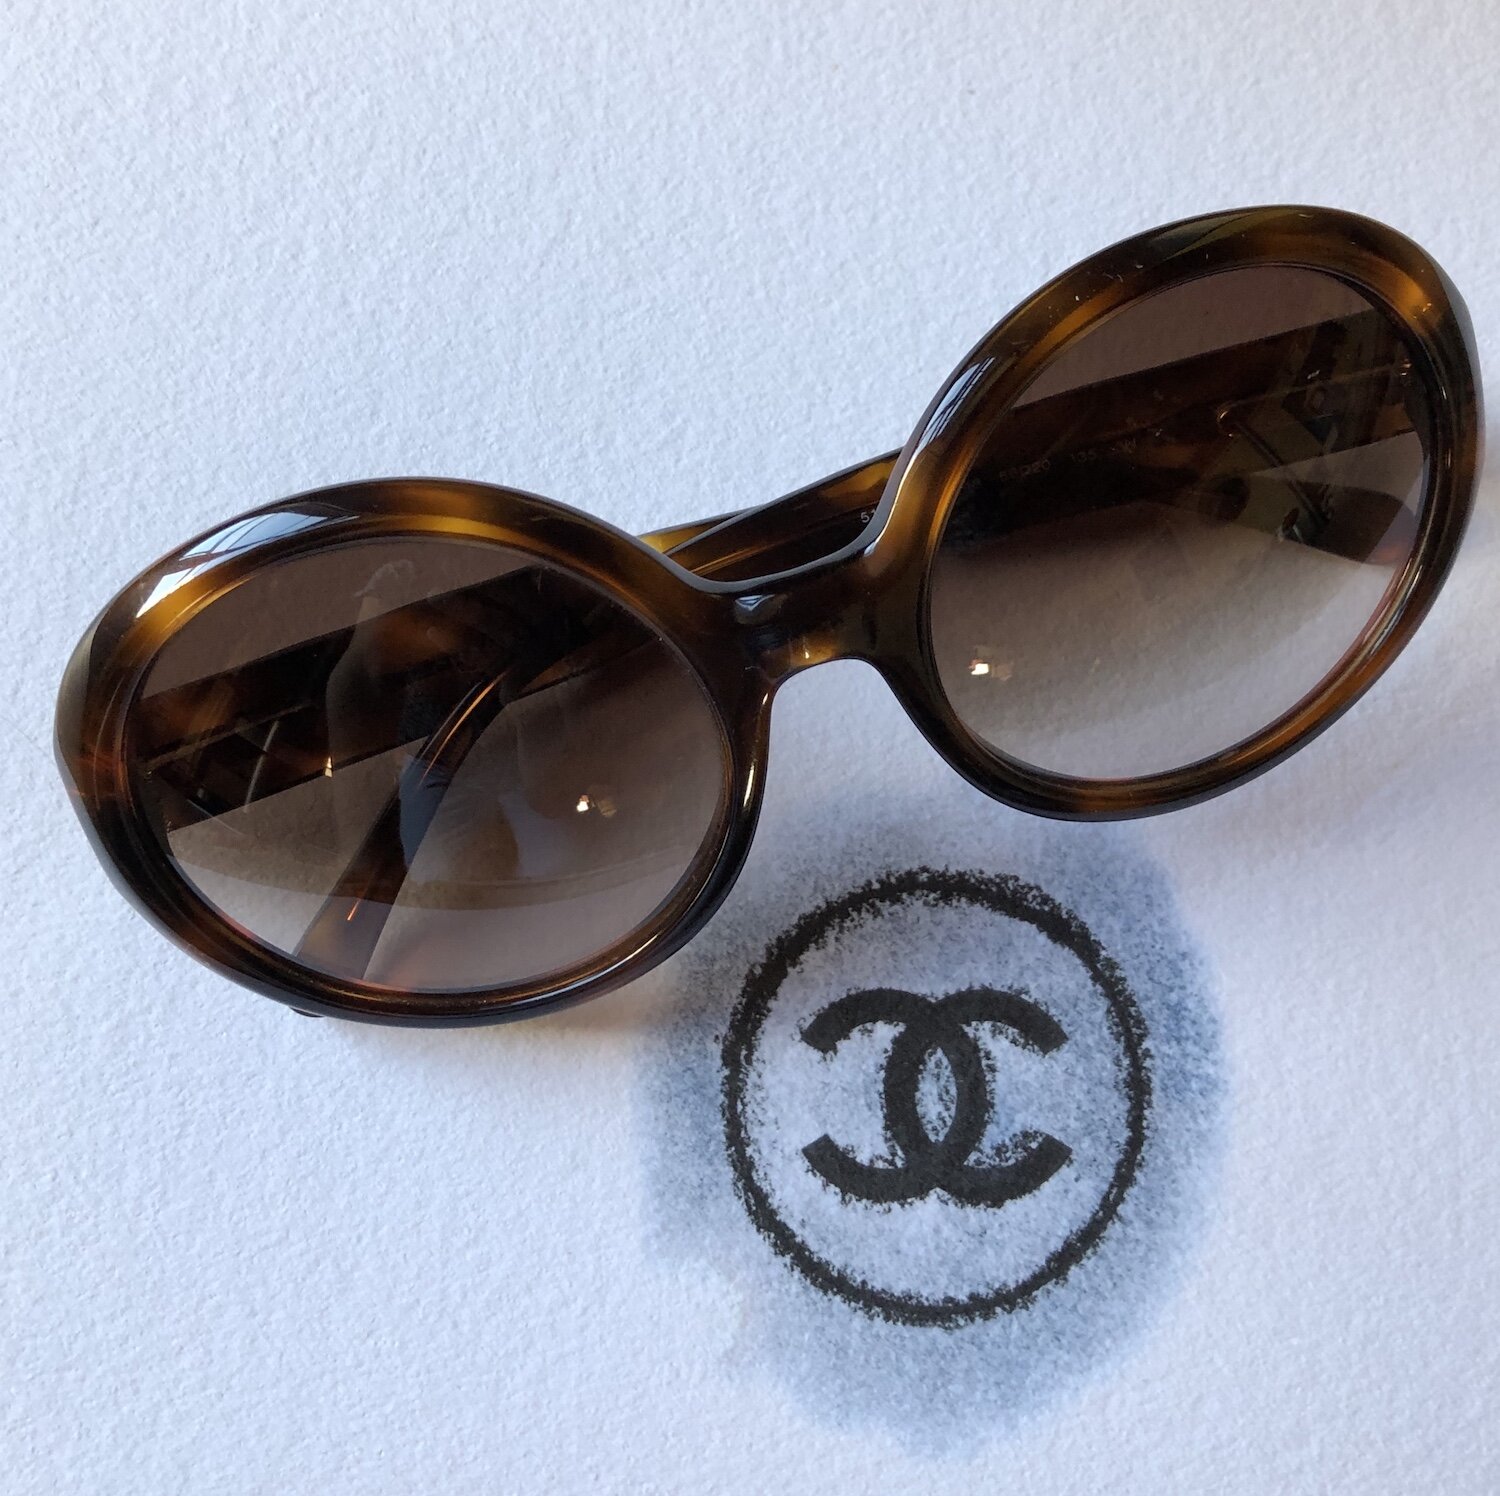 Encorealexandria on Instagram: *SOLD* Chanel #5380 Brown Tortoise Shell  Sunglasses - New with Box and Case - $349 #luxurylifestyle #luxuryresale  #luxuryconsignment #visitALX #designerconsignment #designerbags  #luxuryhandbags #designerlabels